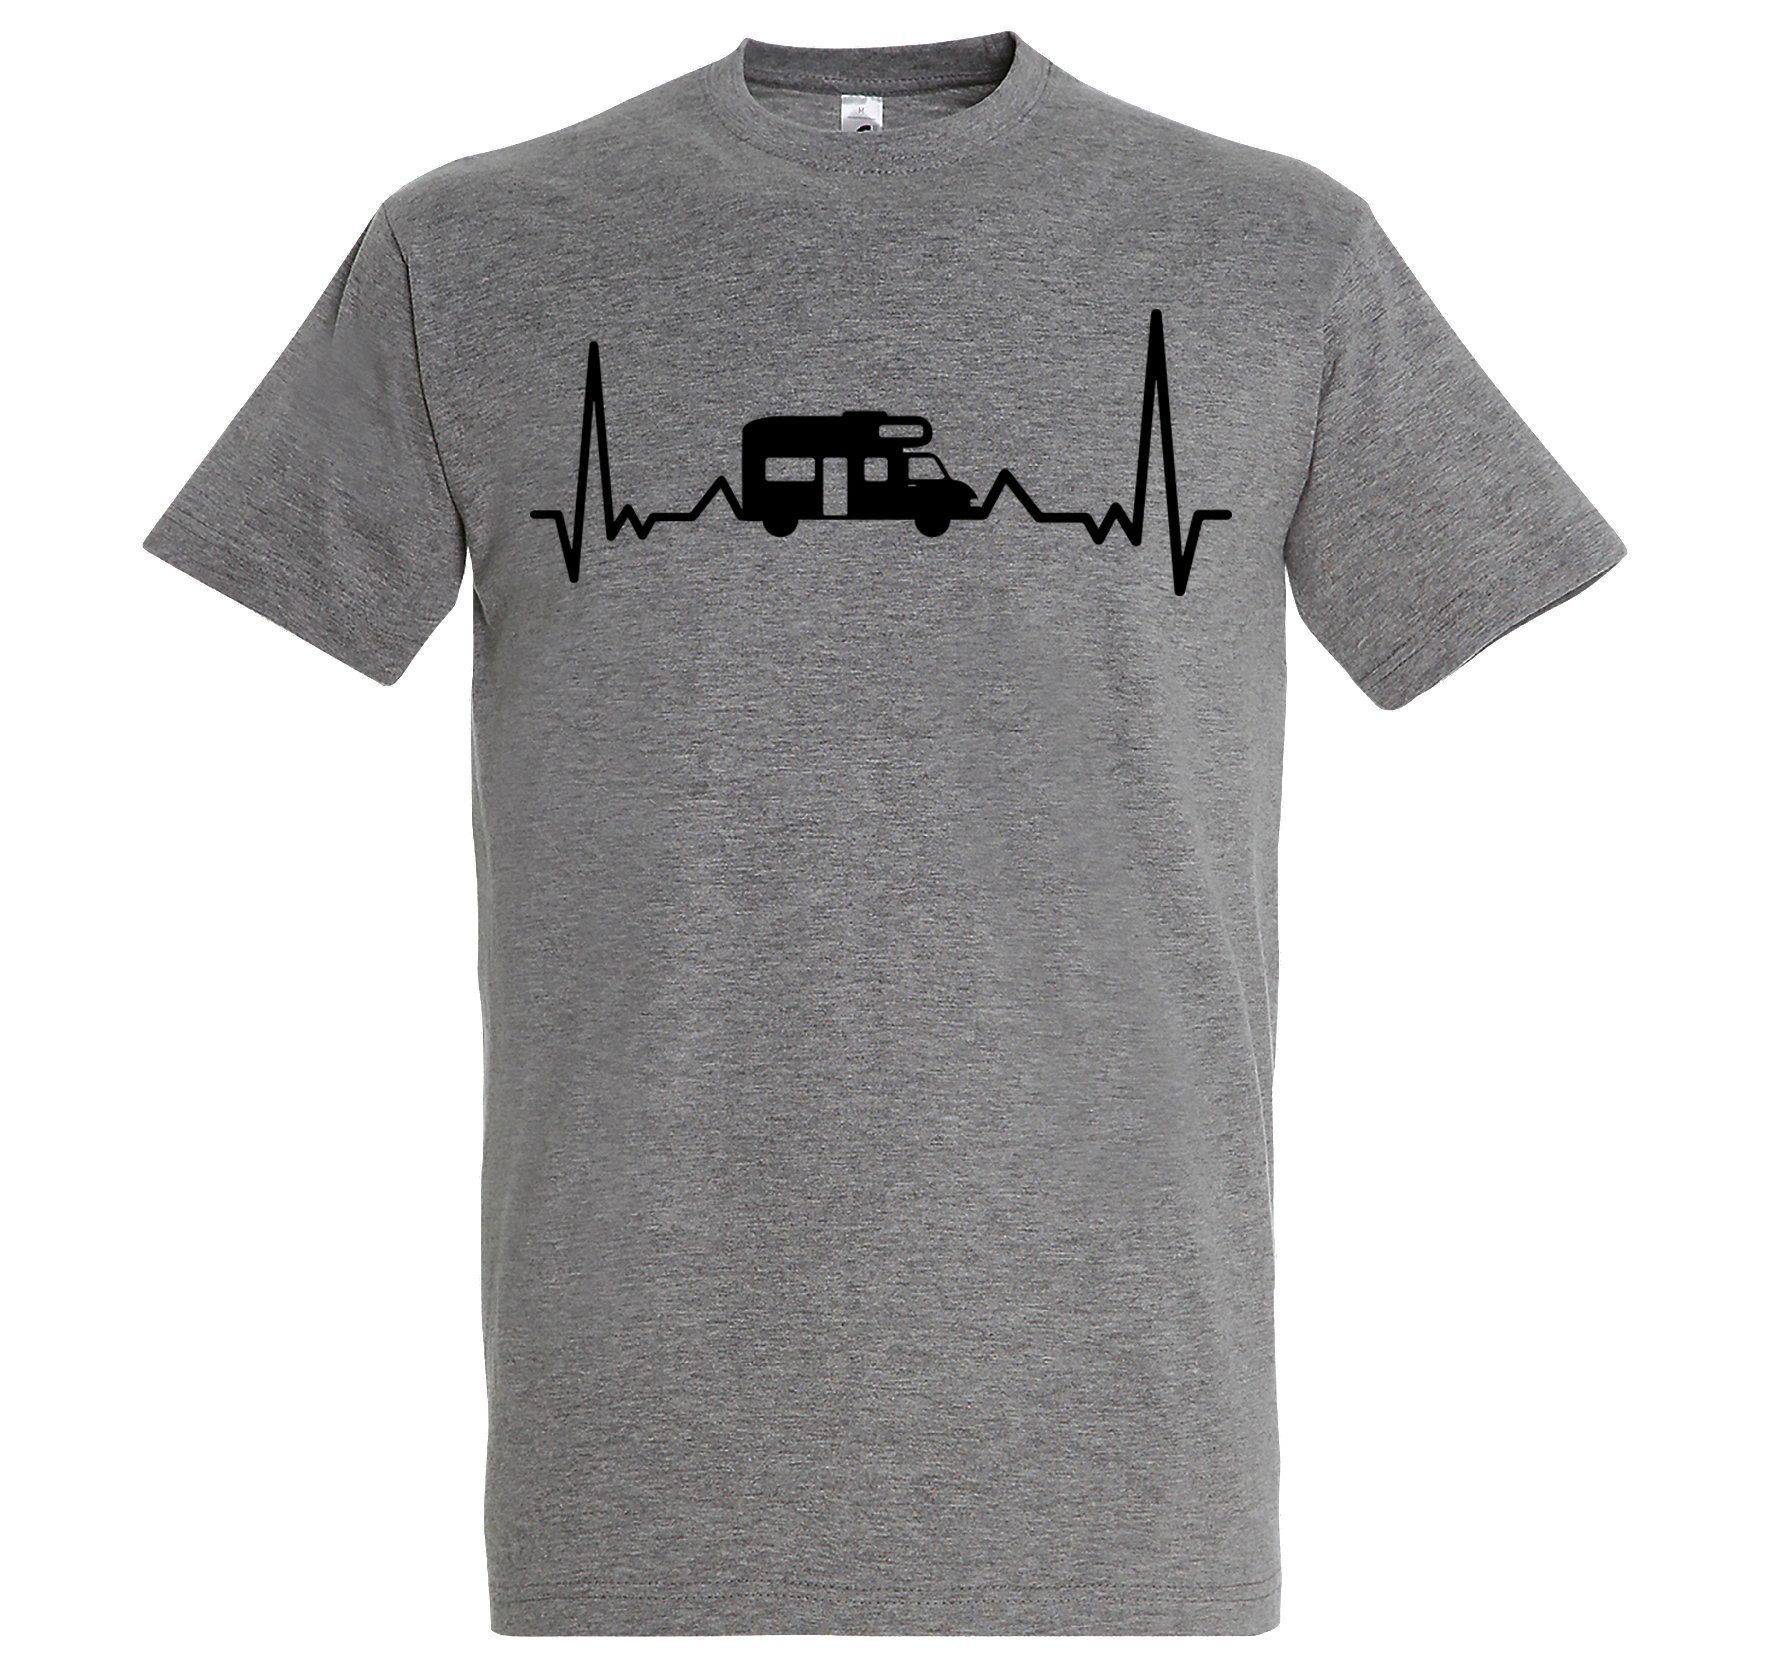 Herzschlag Shirt Camping lutsigem mit Herren T-Shirt Grau Youth Frondruck Designz